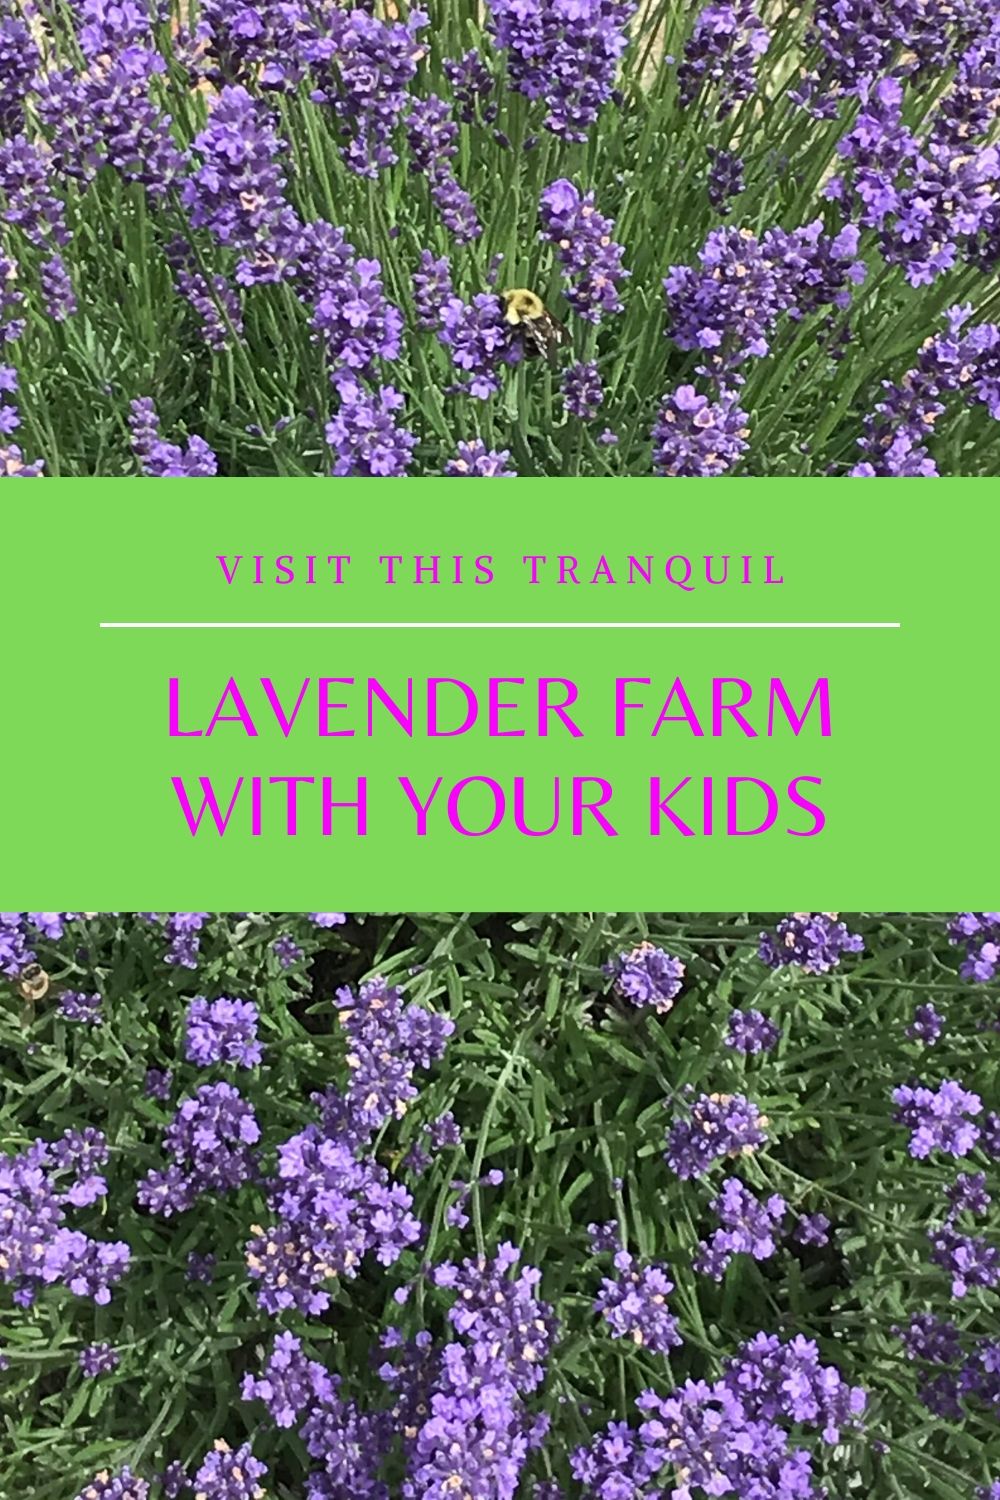 Lavender Pond Farm in CT